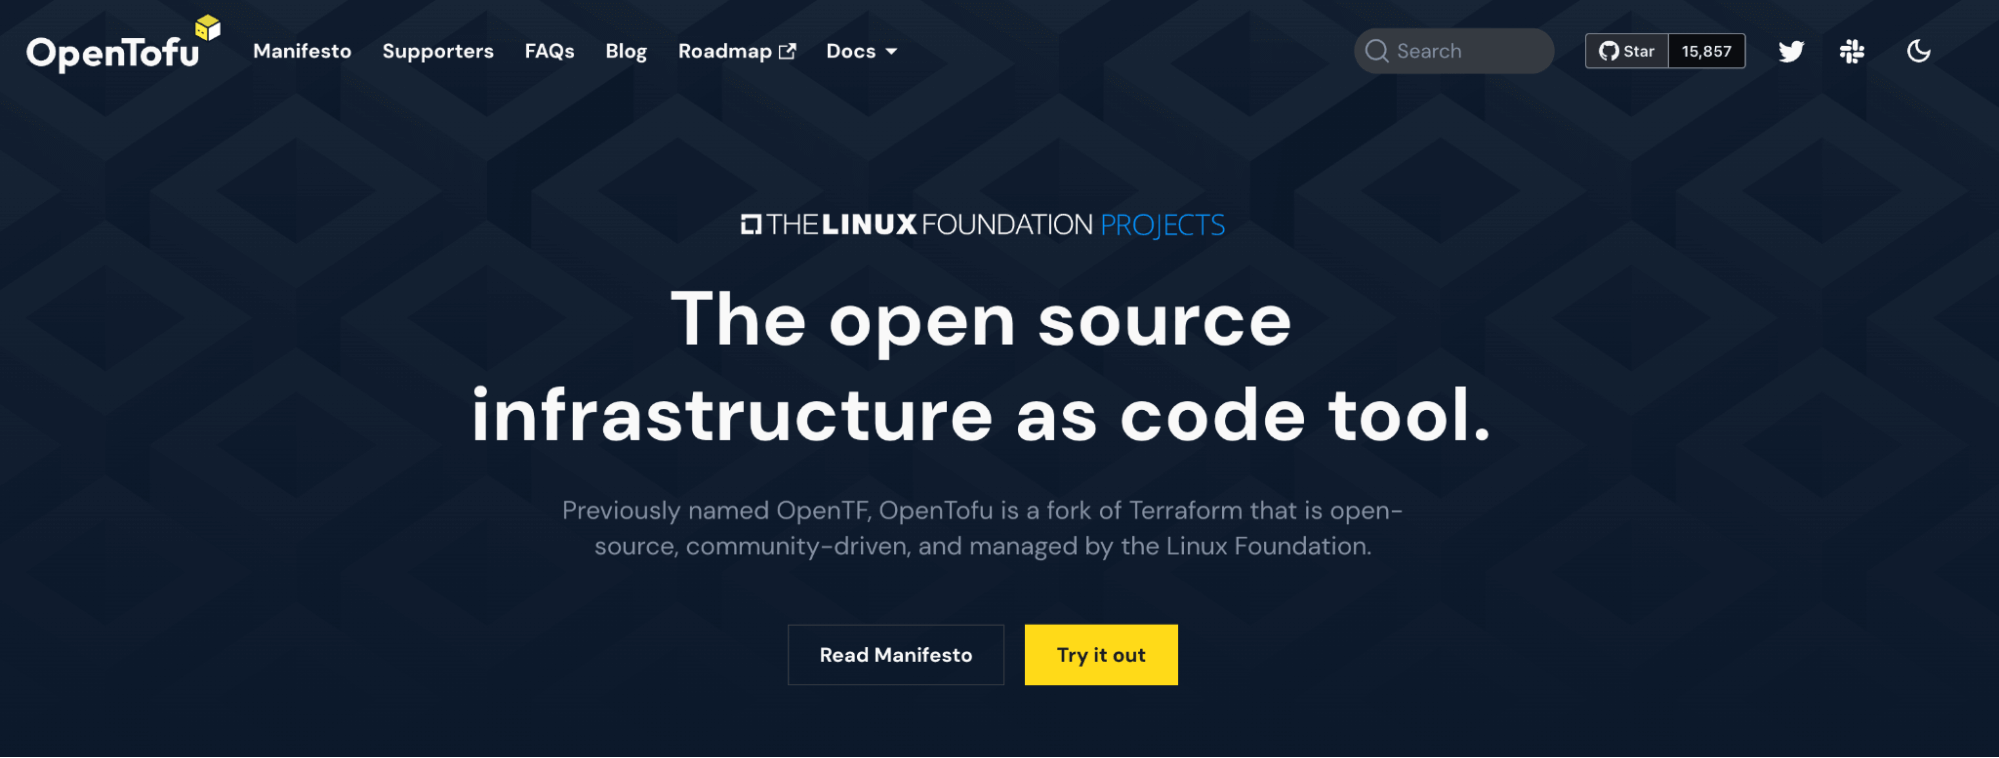 infrastructure as code tools opentofu